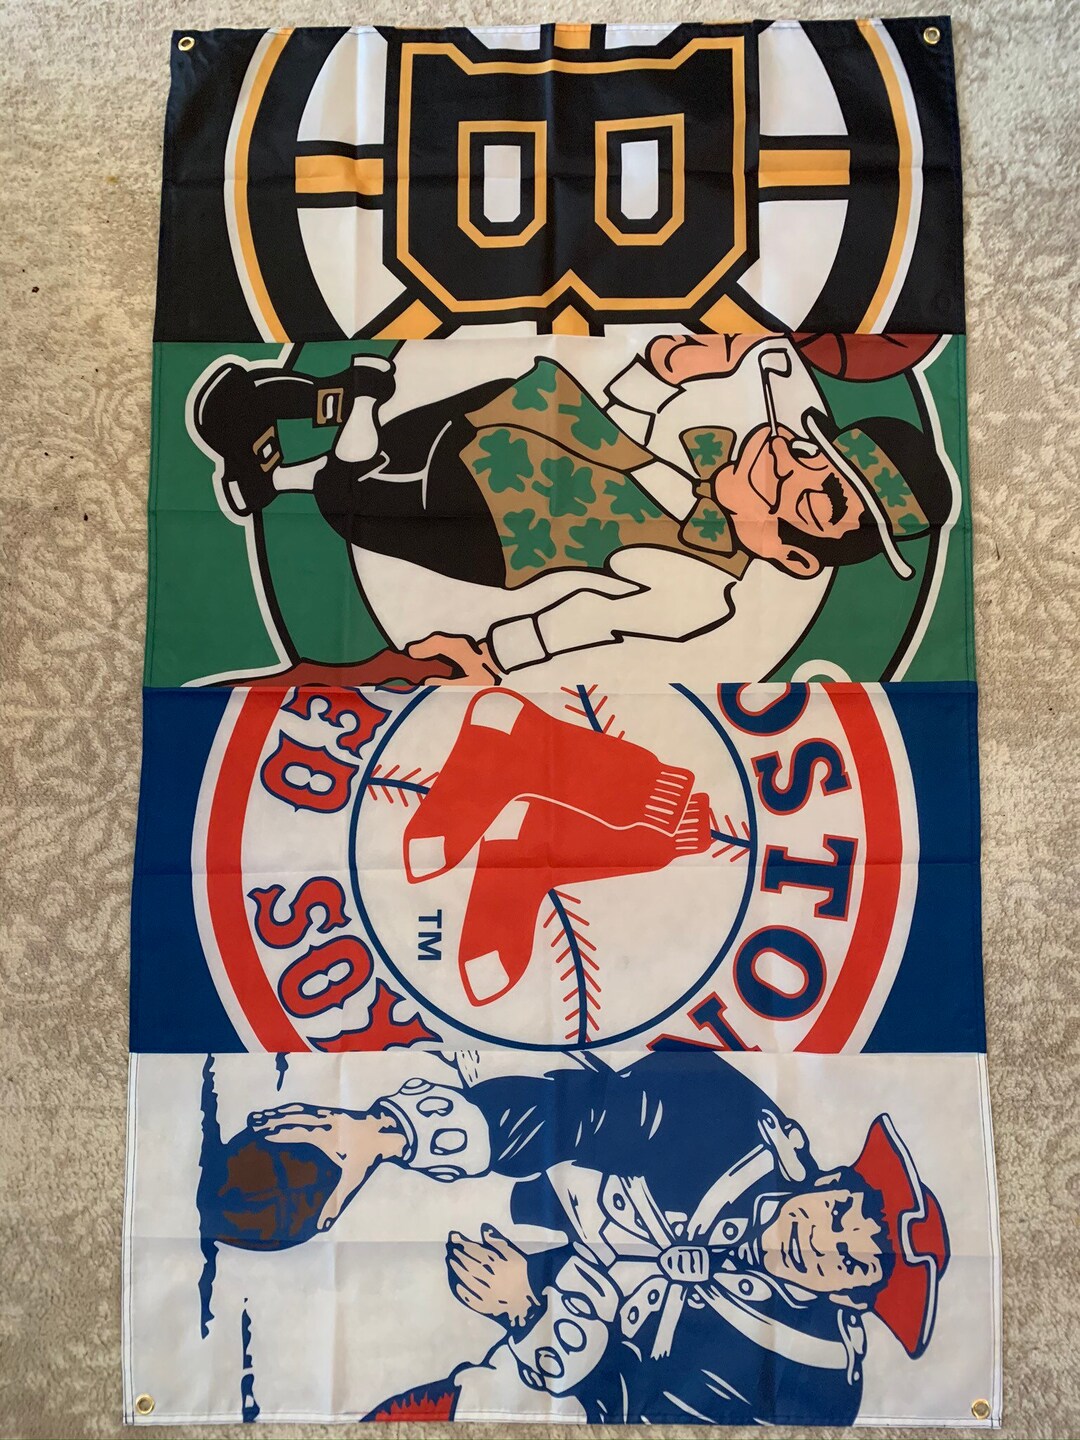 BOSTON City of CHAMPIONS Sports Teams (4) LOGO Sports Teams Patriots Bruins  Red Sox Celtics Flags (3’x 5’)